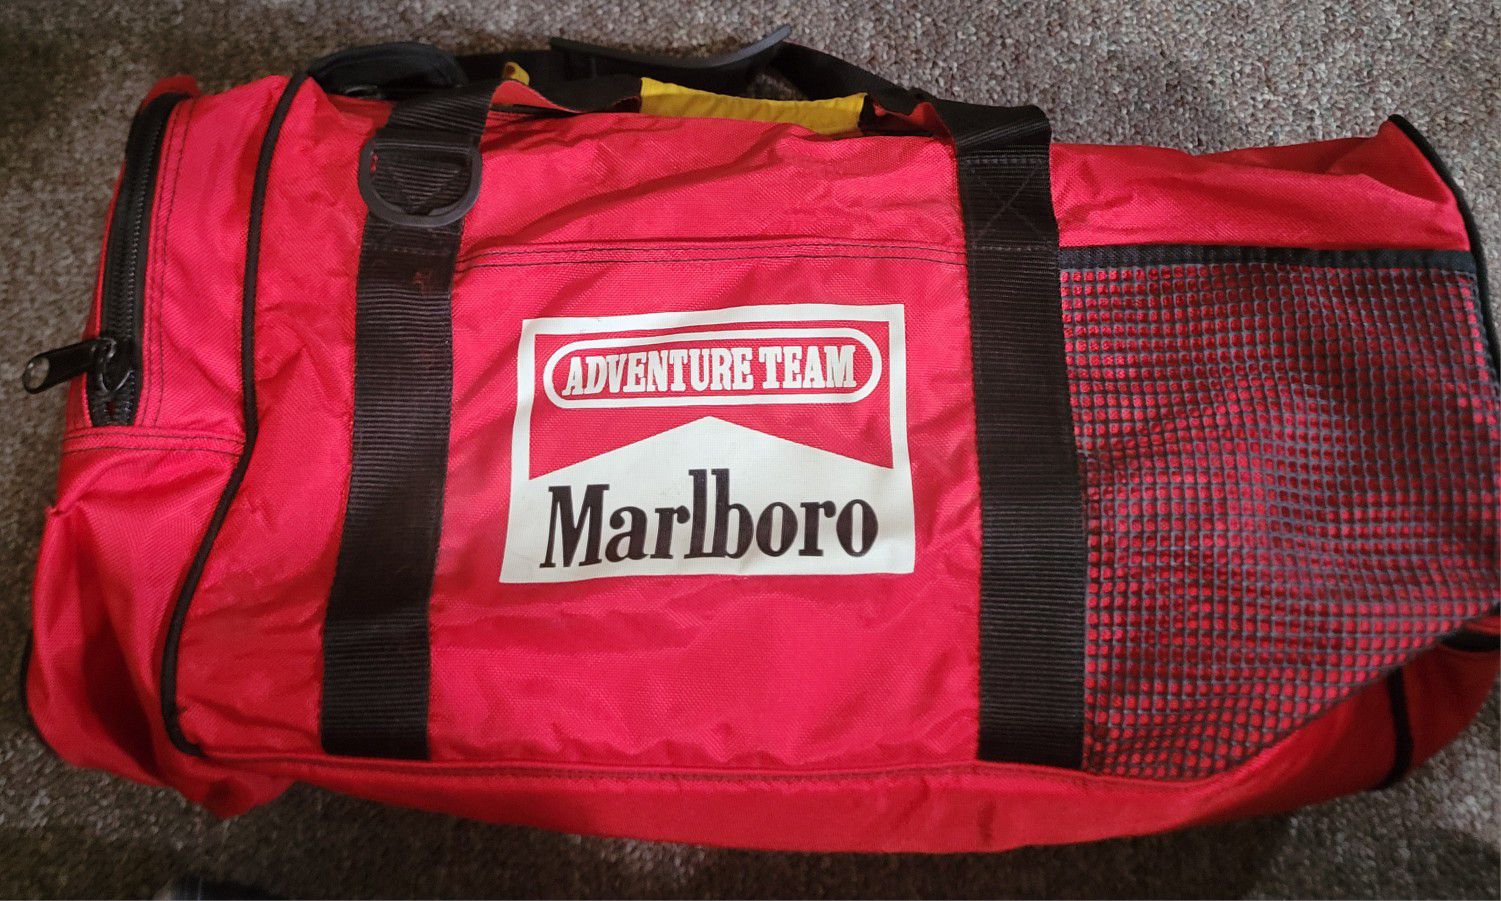 Marlboro Adventure Team Duffel Bag 